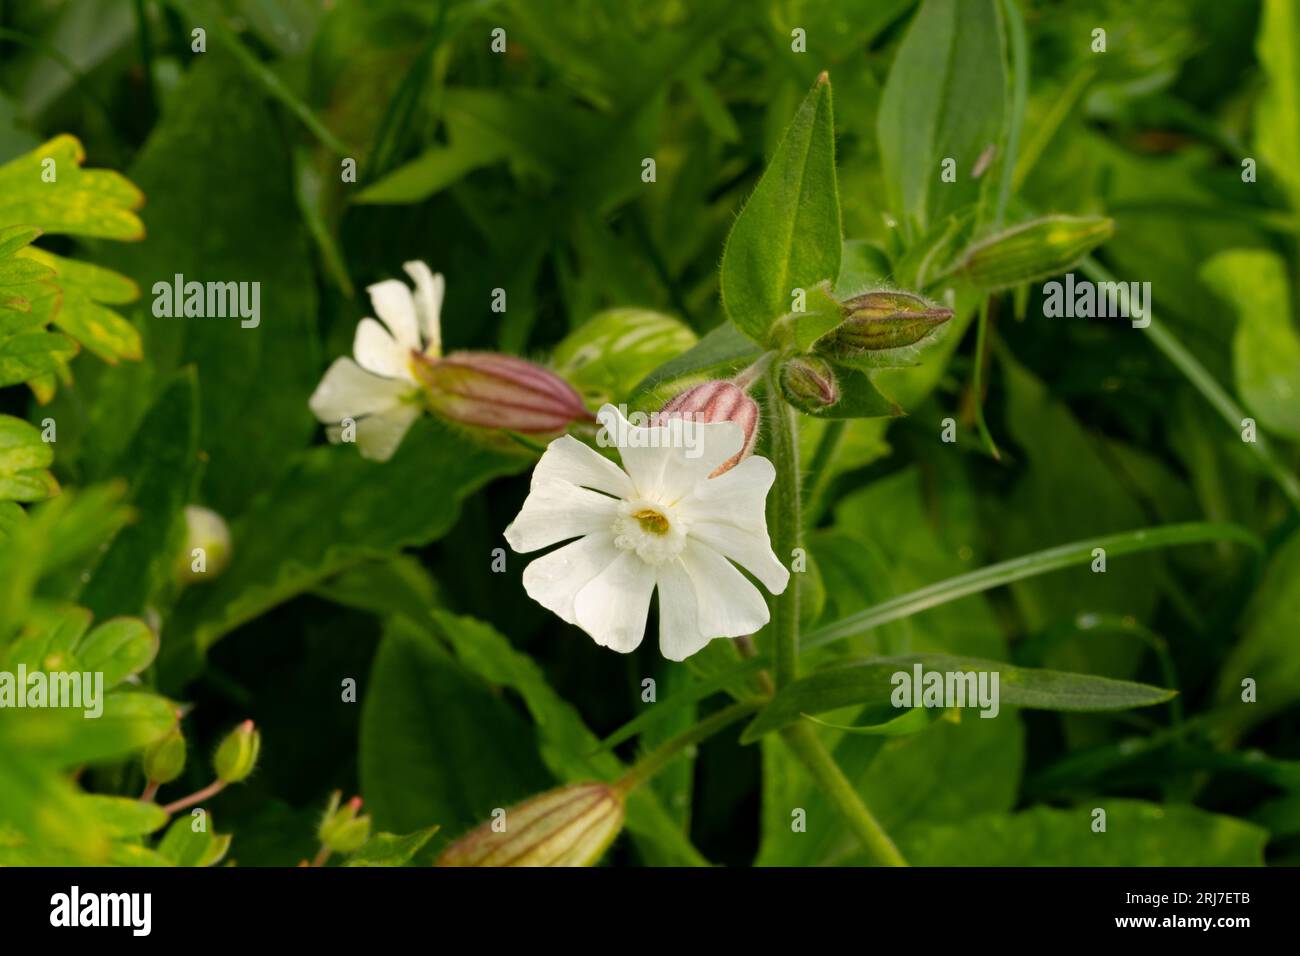 Oxalis acetosella Holz Sauerampfer weiße Blumenblüten - Tapetendesign Innenfotografie Stockfoto